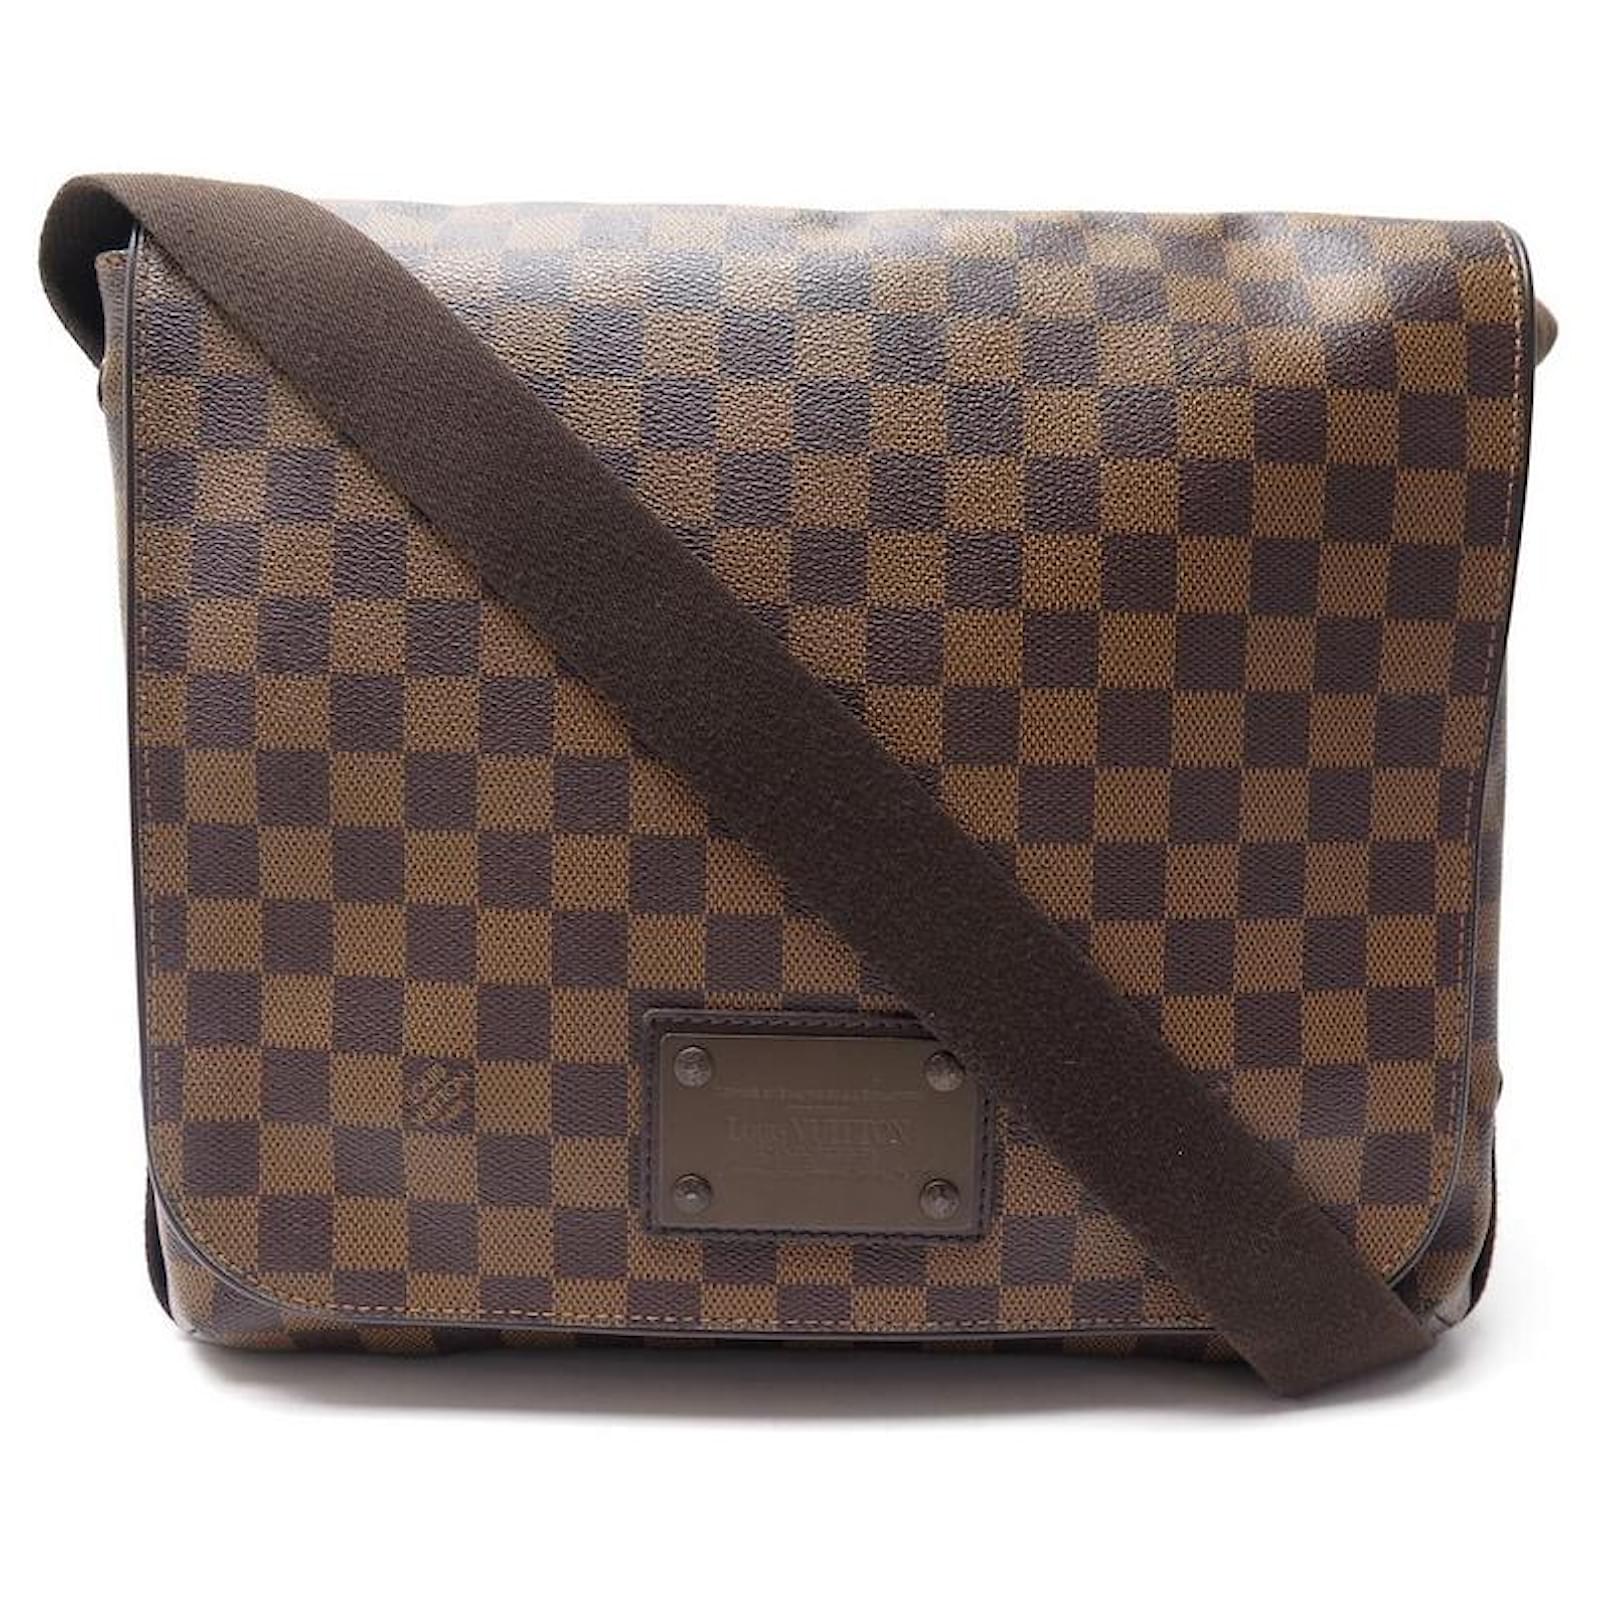 Louis Vuitton Messenger Shoulder Bag in Ebene Damier Canvas and